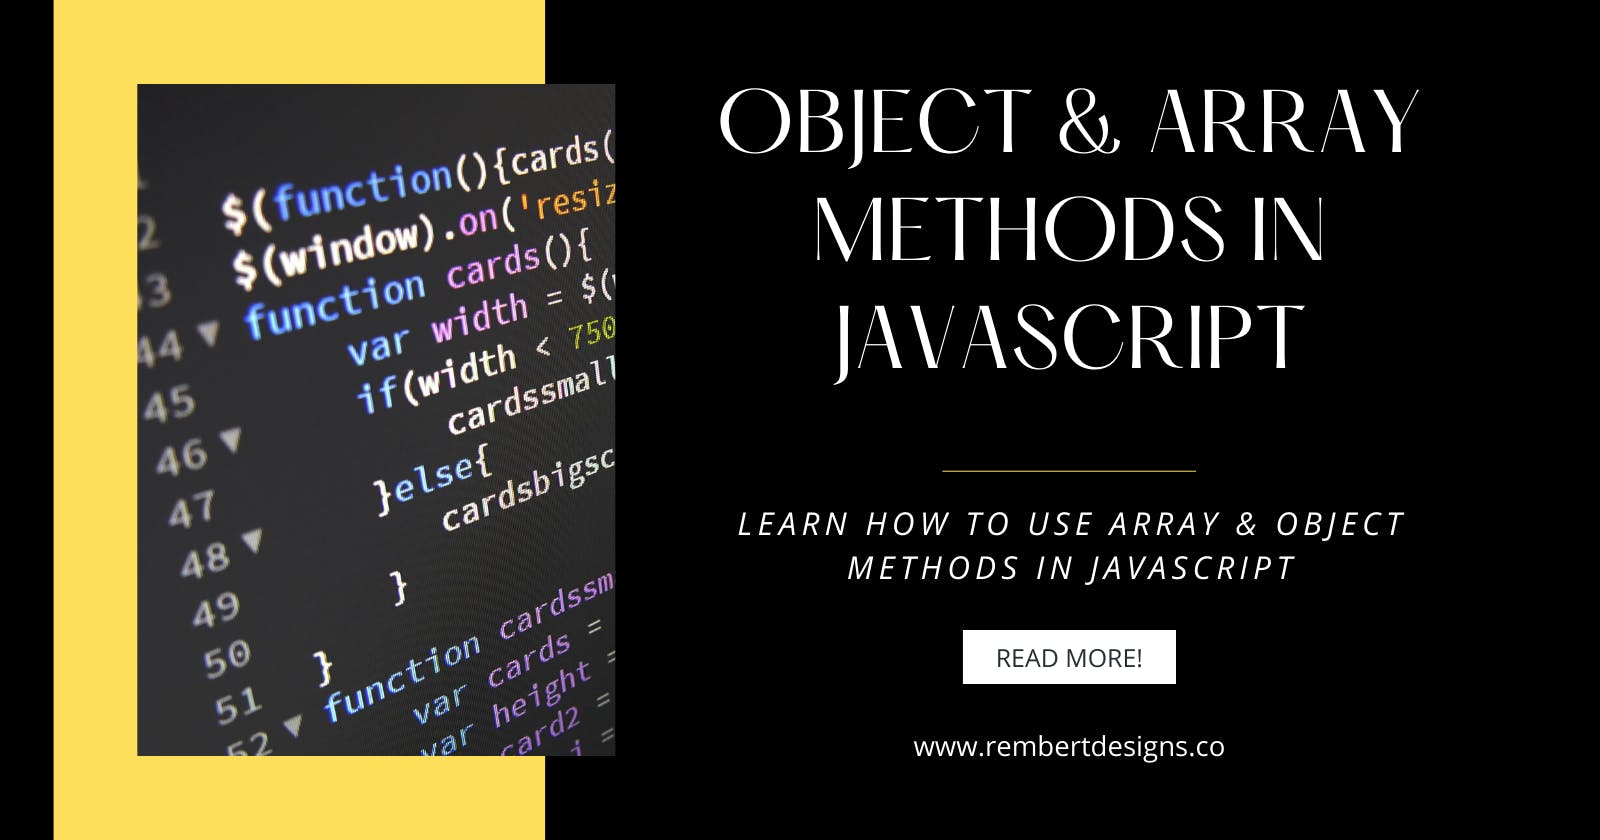 Object & Array Methods in JavaScript